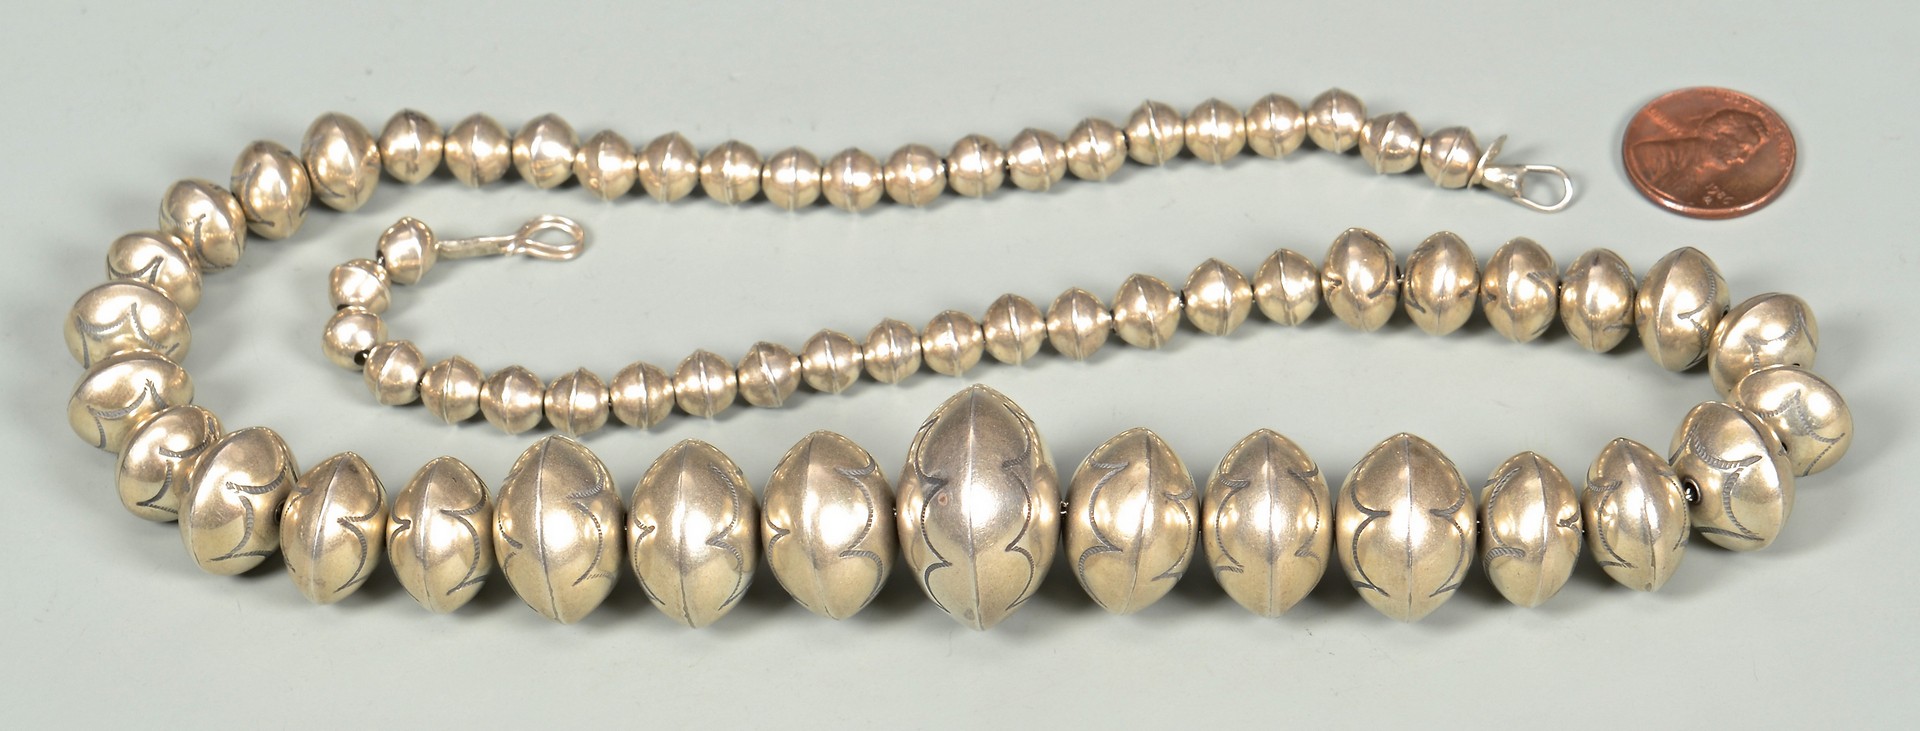 Lot 637: Handwrought Navajo Silver Bead Necklace